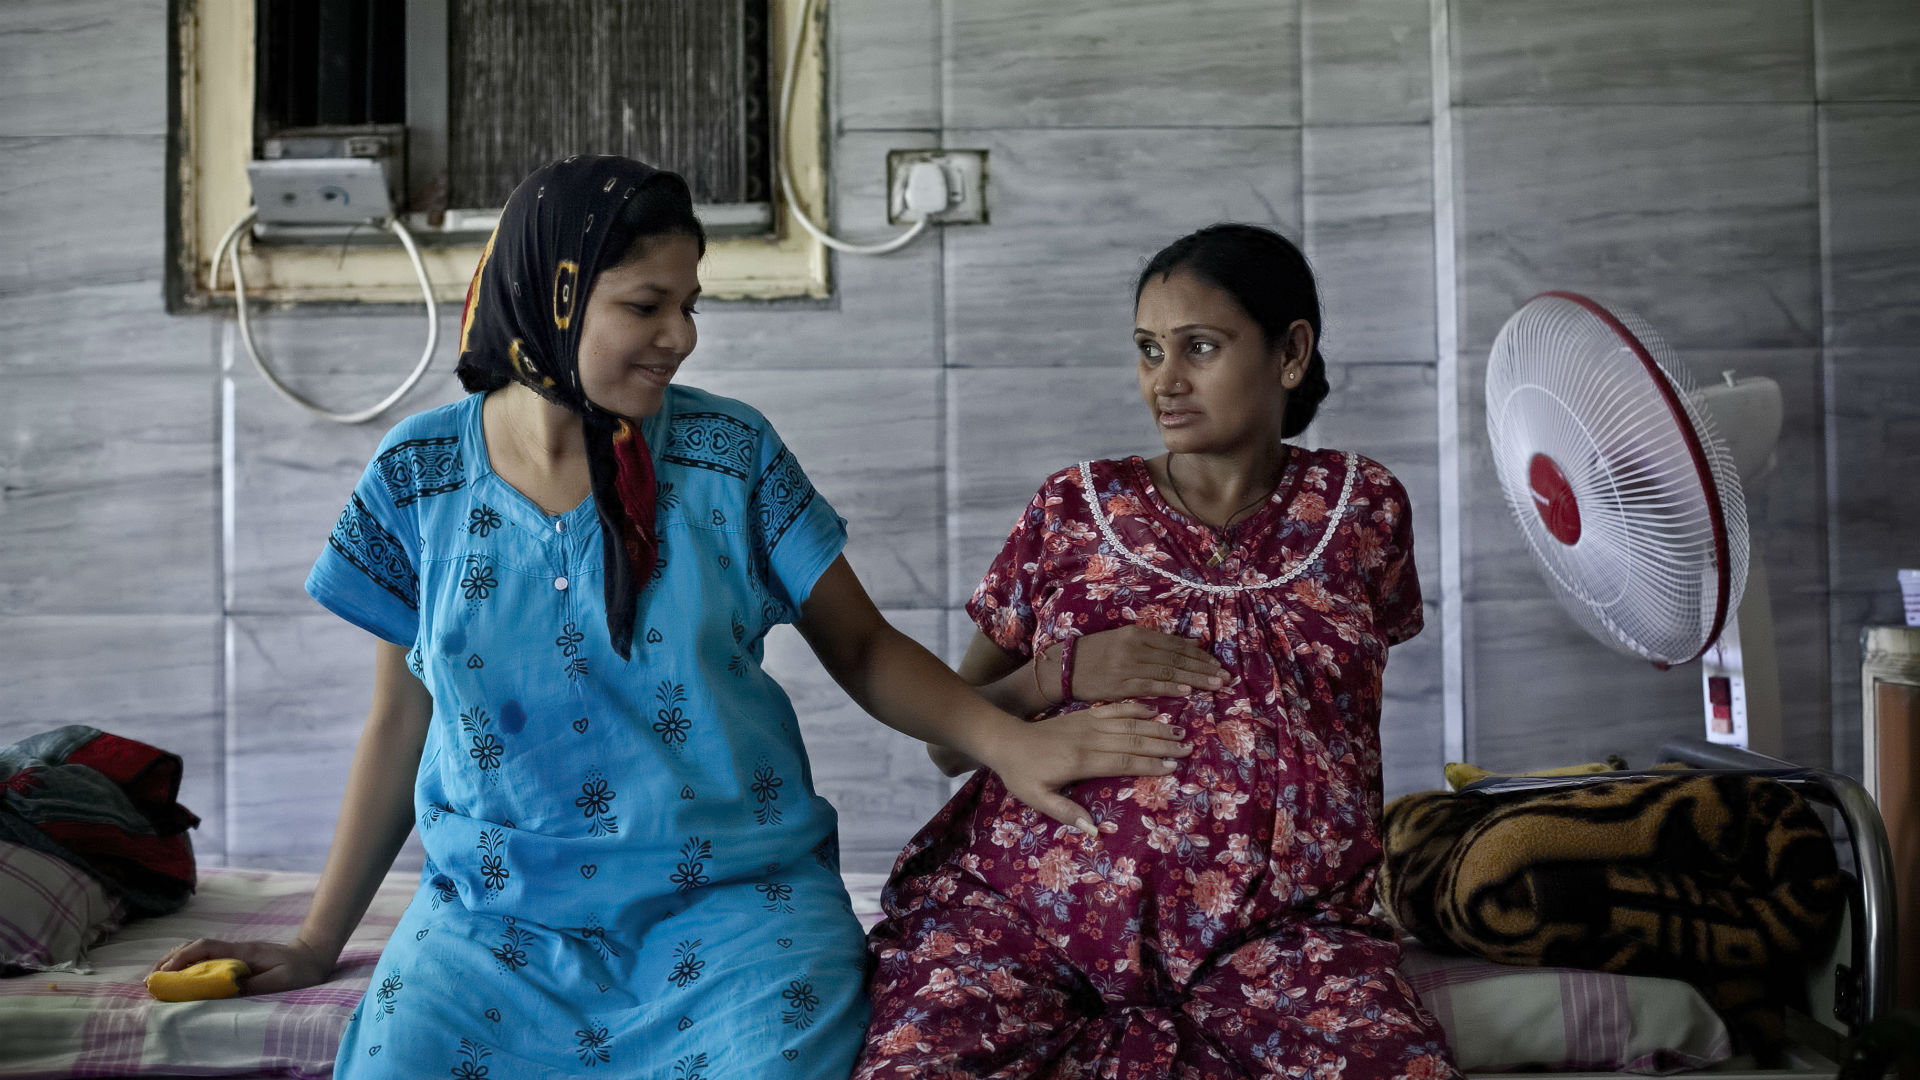 India aconseja a las embarazadas evitar pensamientos “impuros”